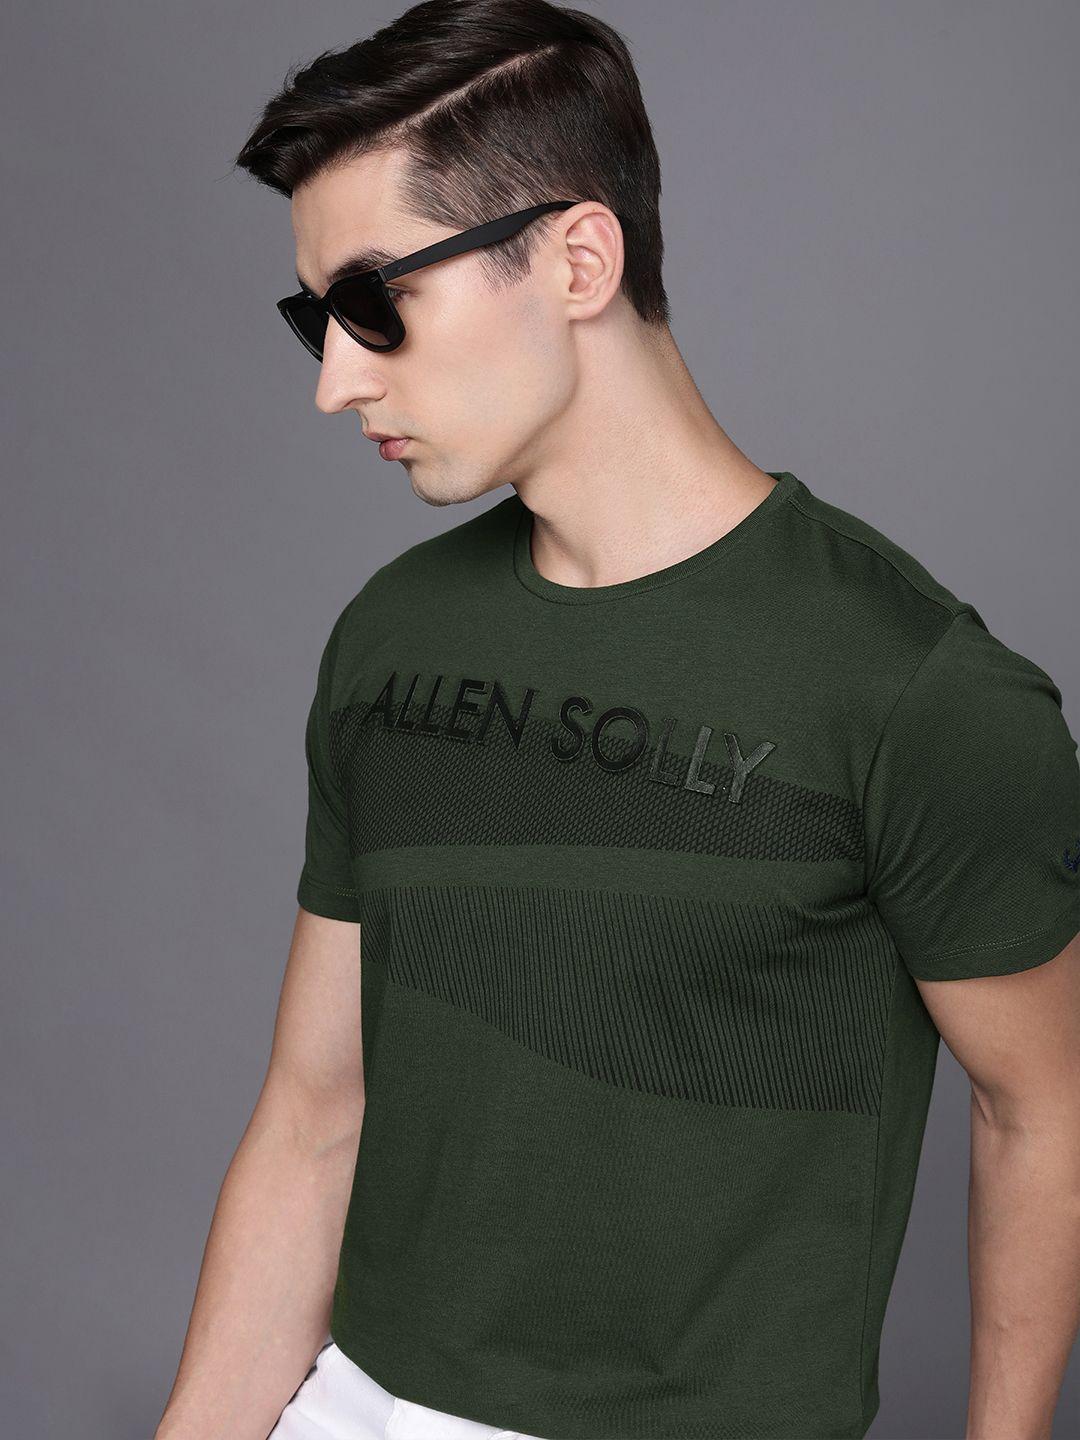 allen solly men olive green & black brand logo printed pure cotton slim fit t-shirt